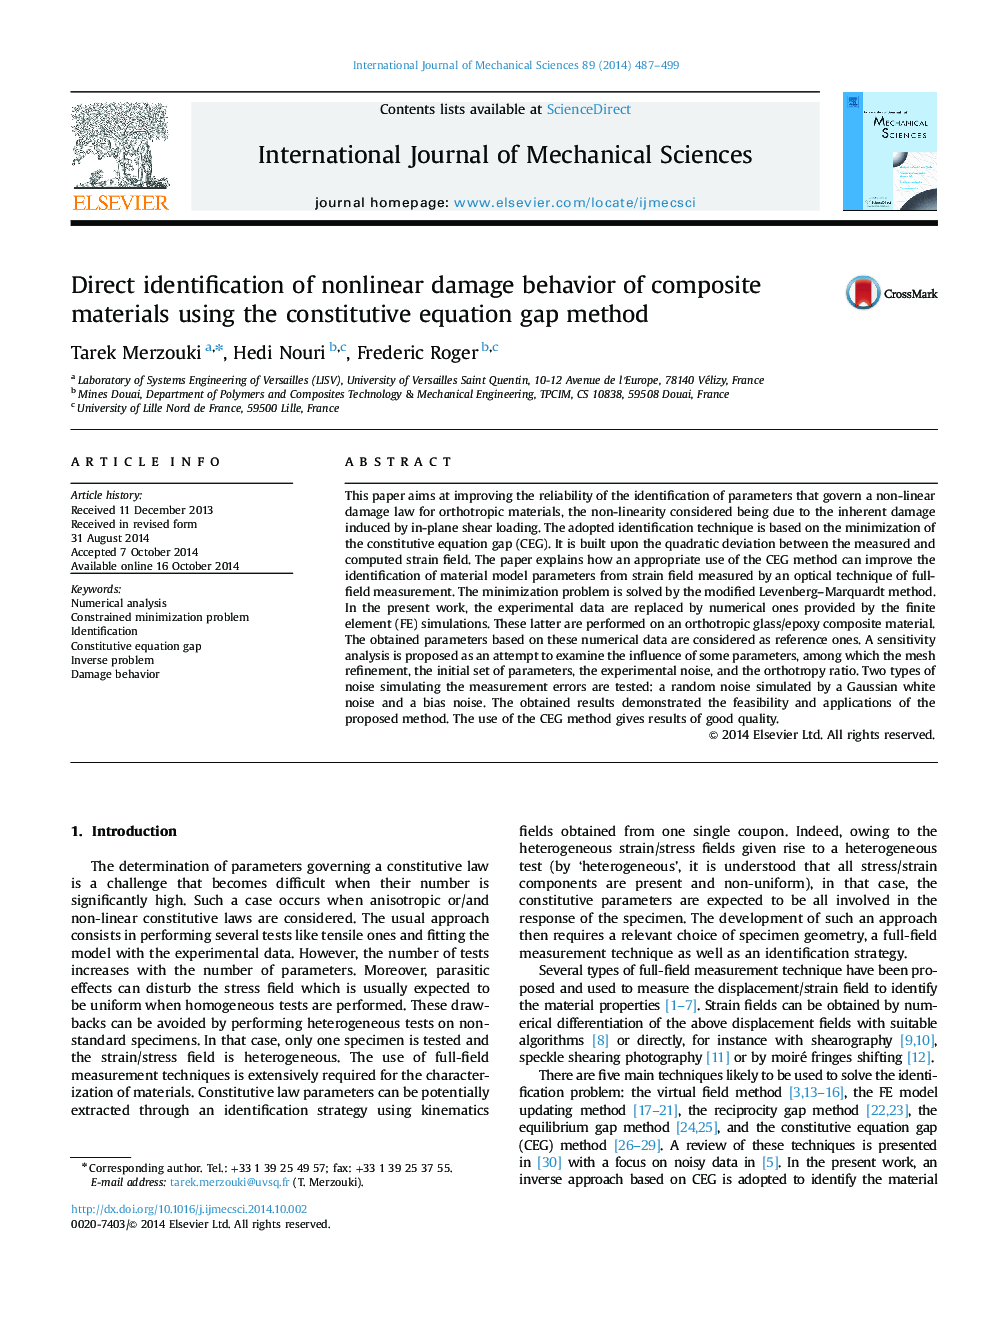 Direct identification of nonlinear damage behavior of composite materials using the constitutive equation gap method